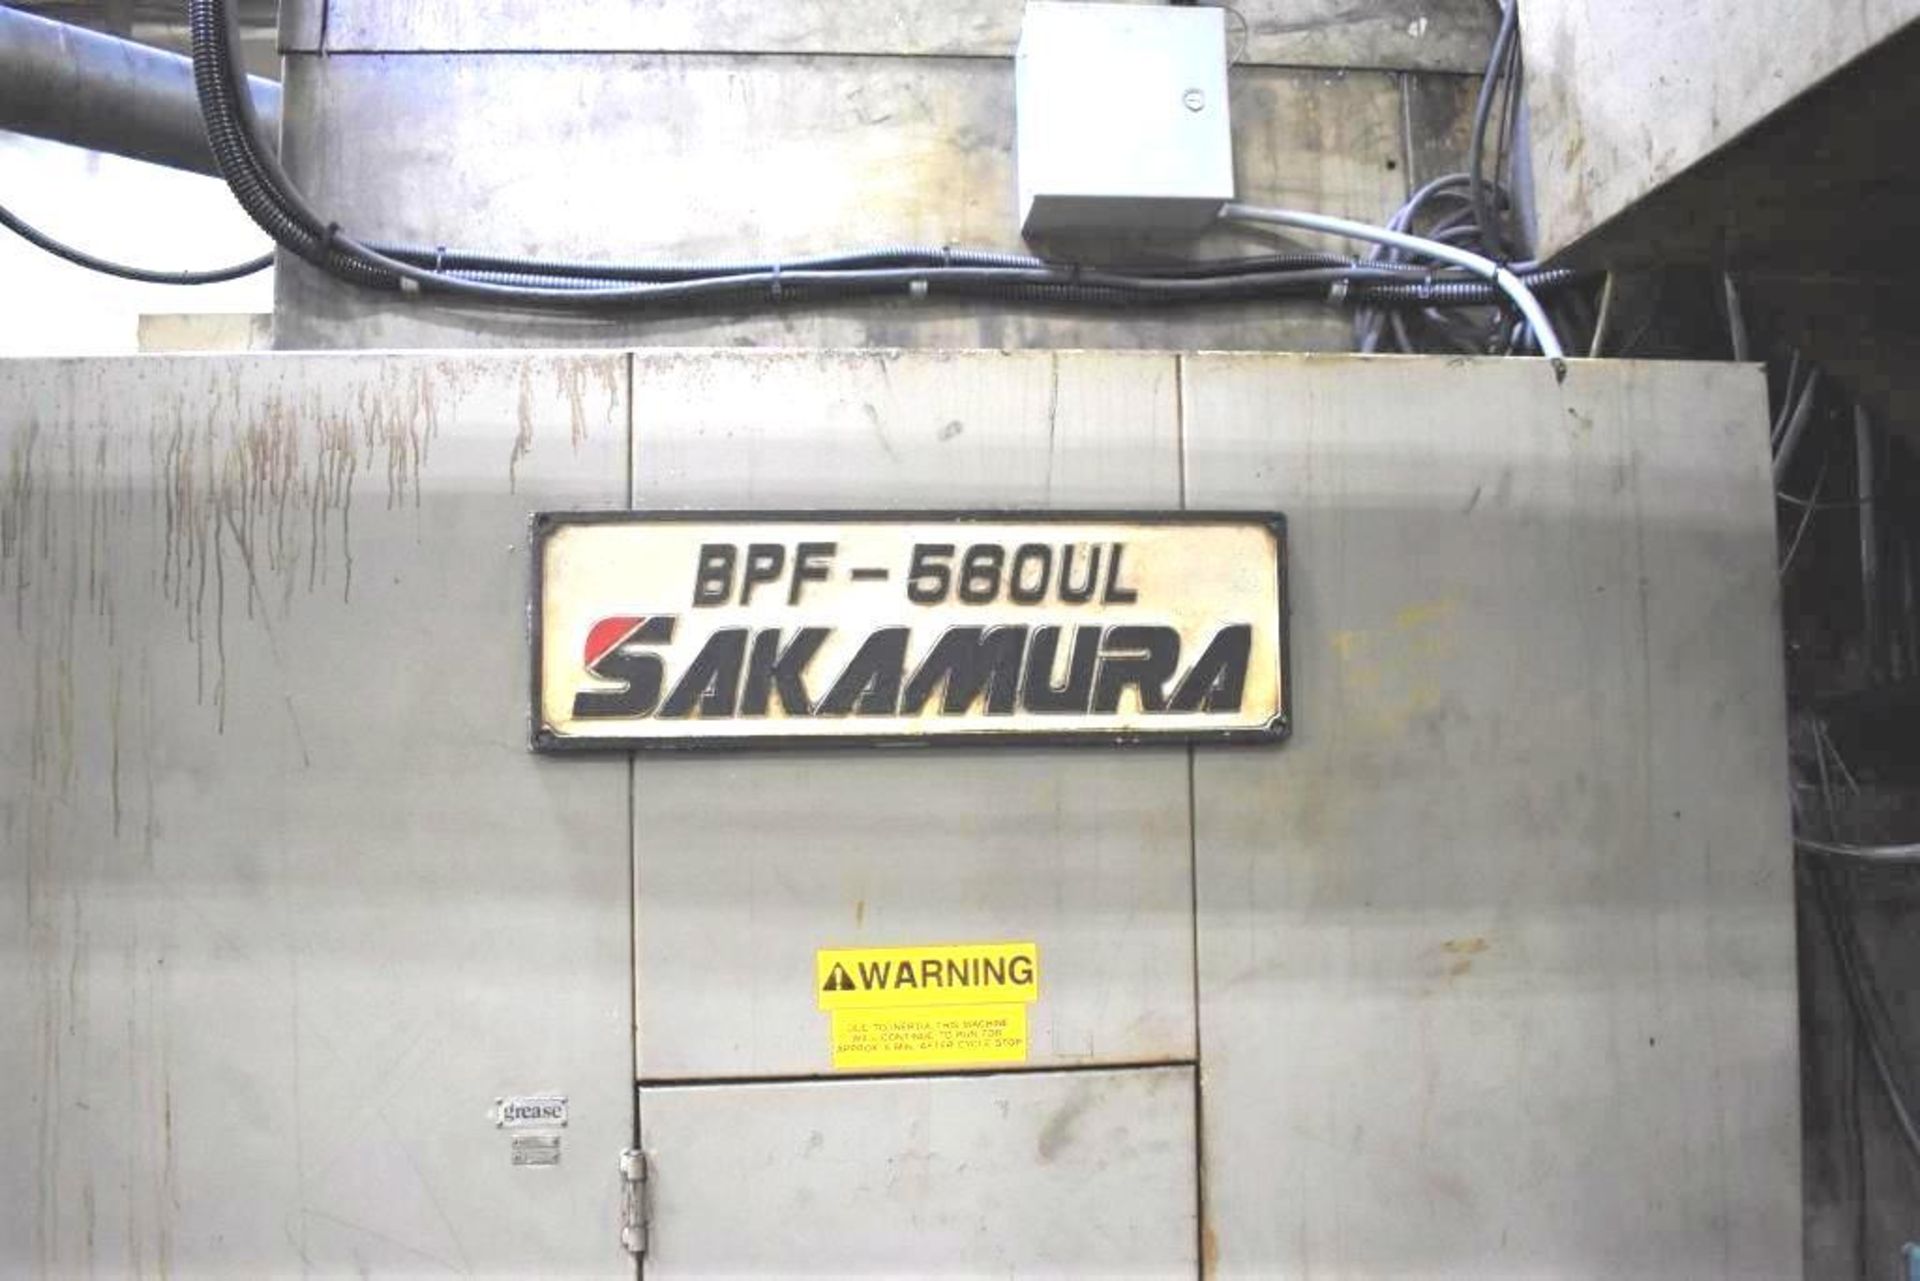 Sakamura BPF-560UL 6-Station 5-Die Cold Former - Image 16 of 18